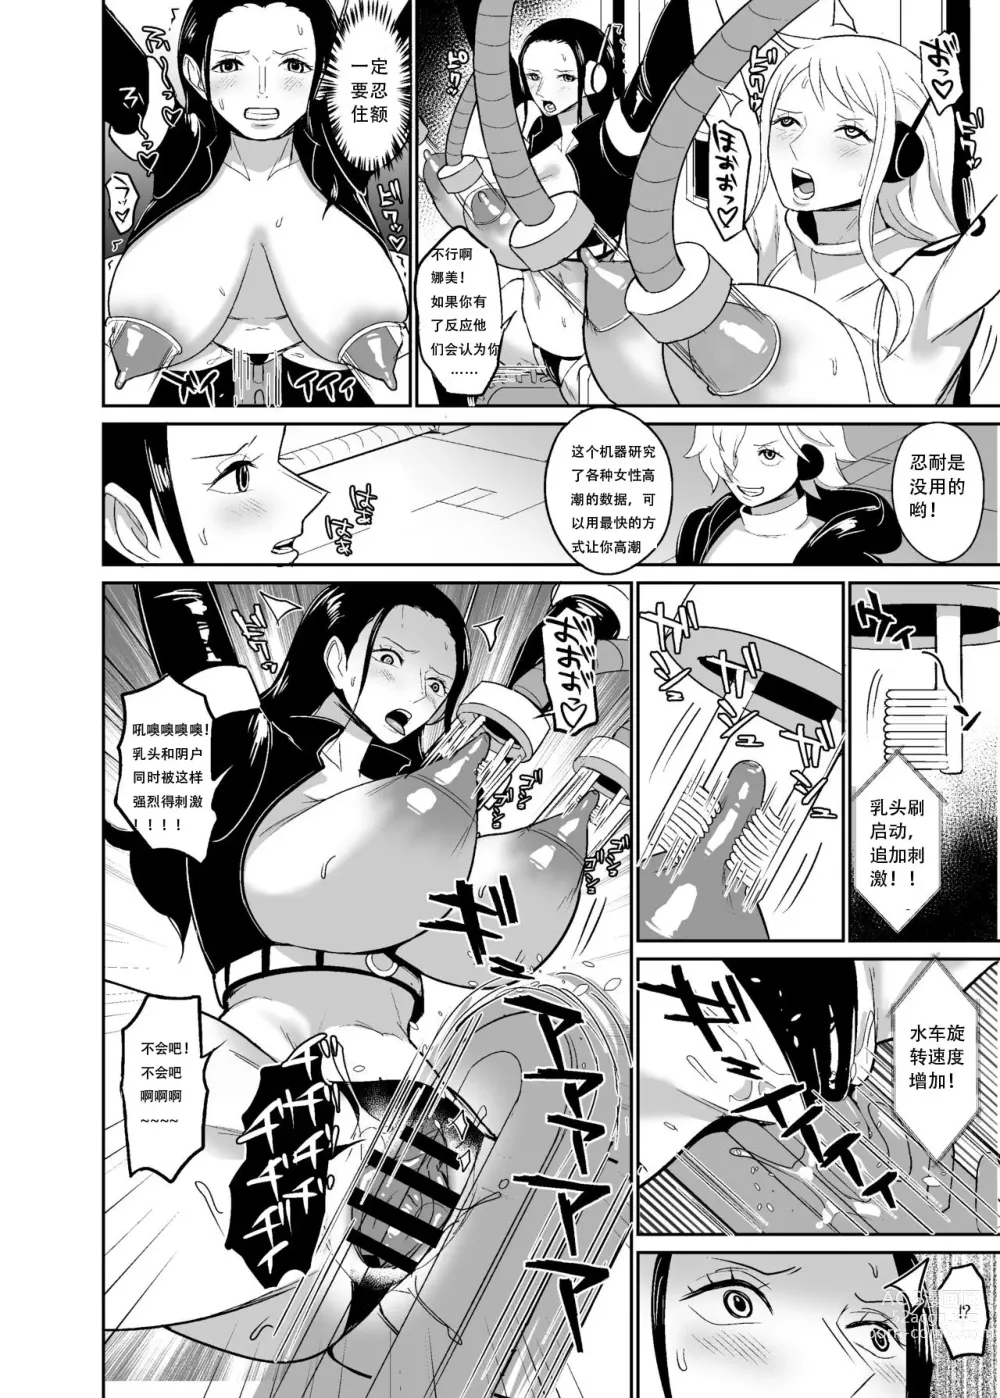 Page 7 of doujinshi Namirobi Female Pirate Forced Climax Machine Rape